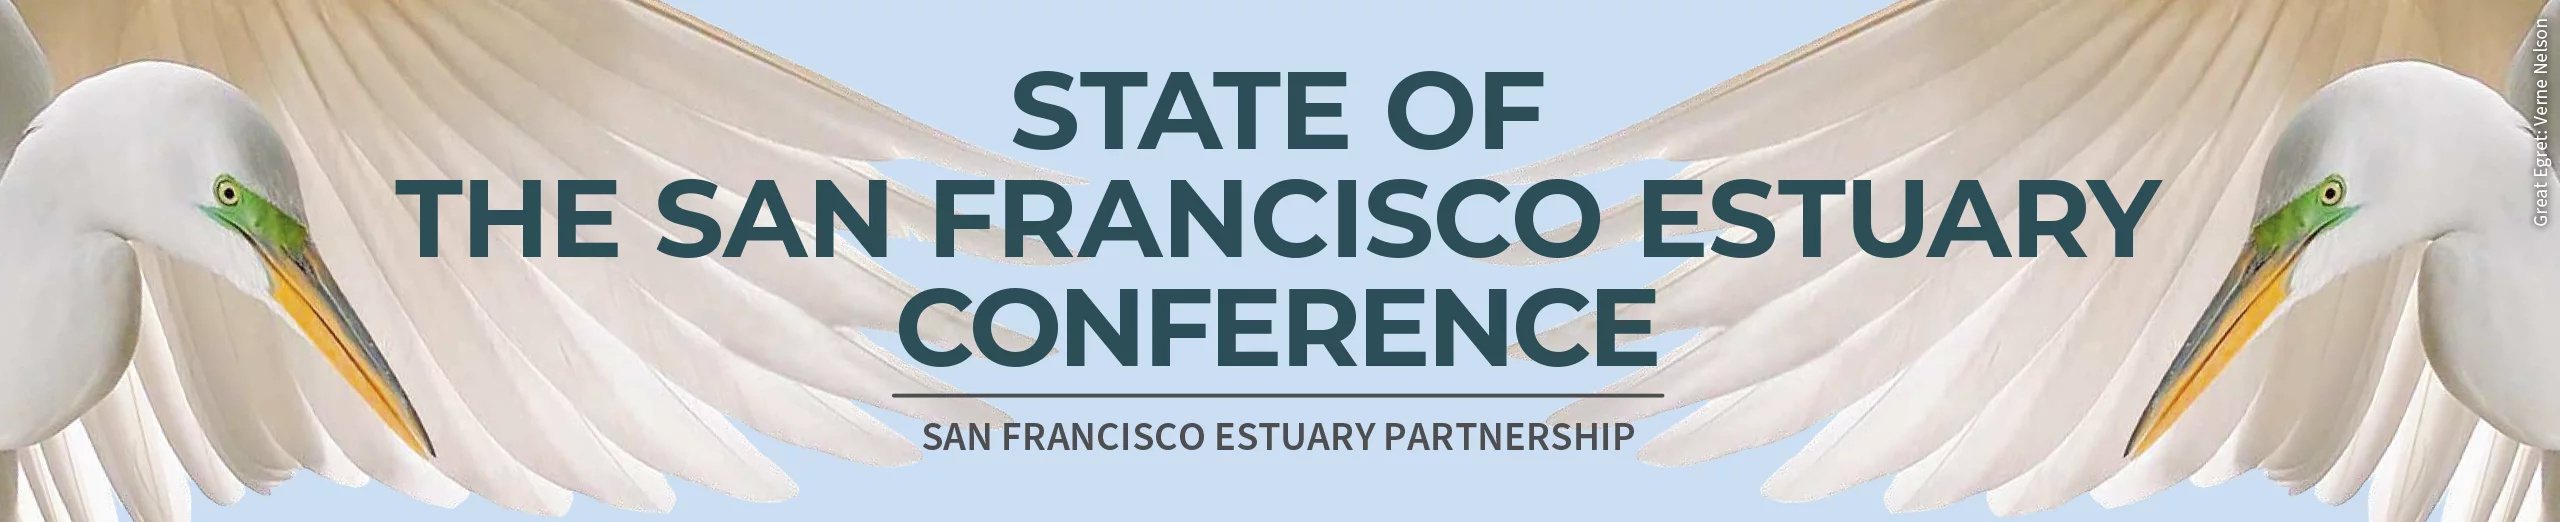 SOE Conference Web Banner